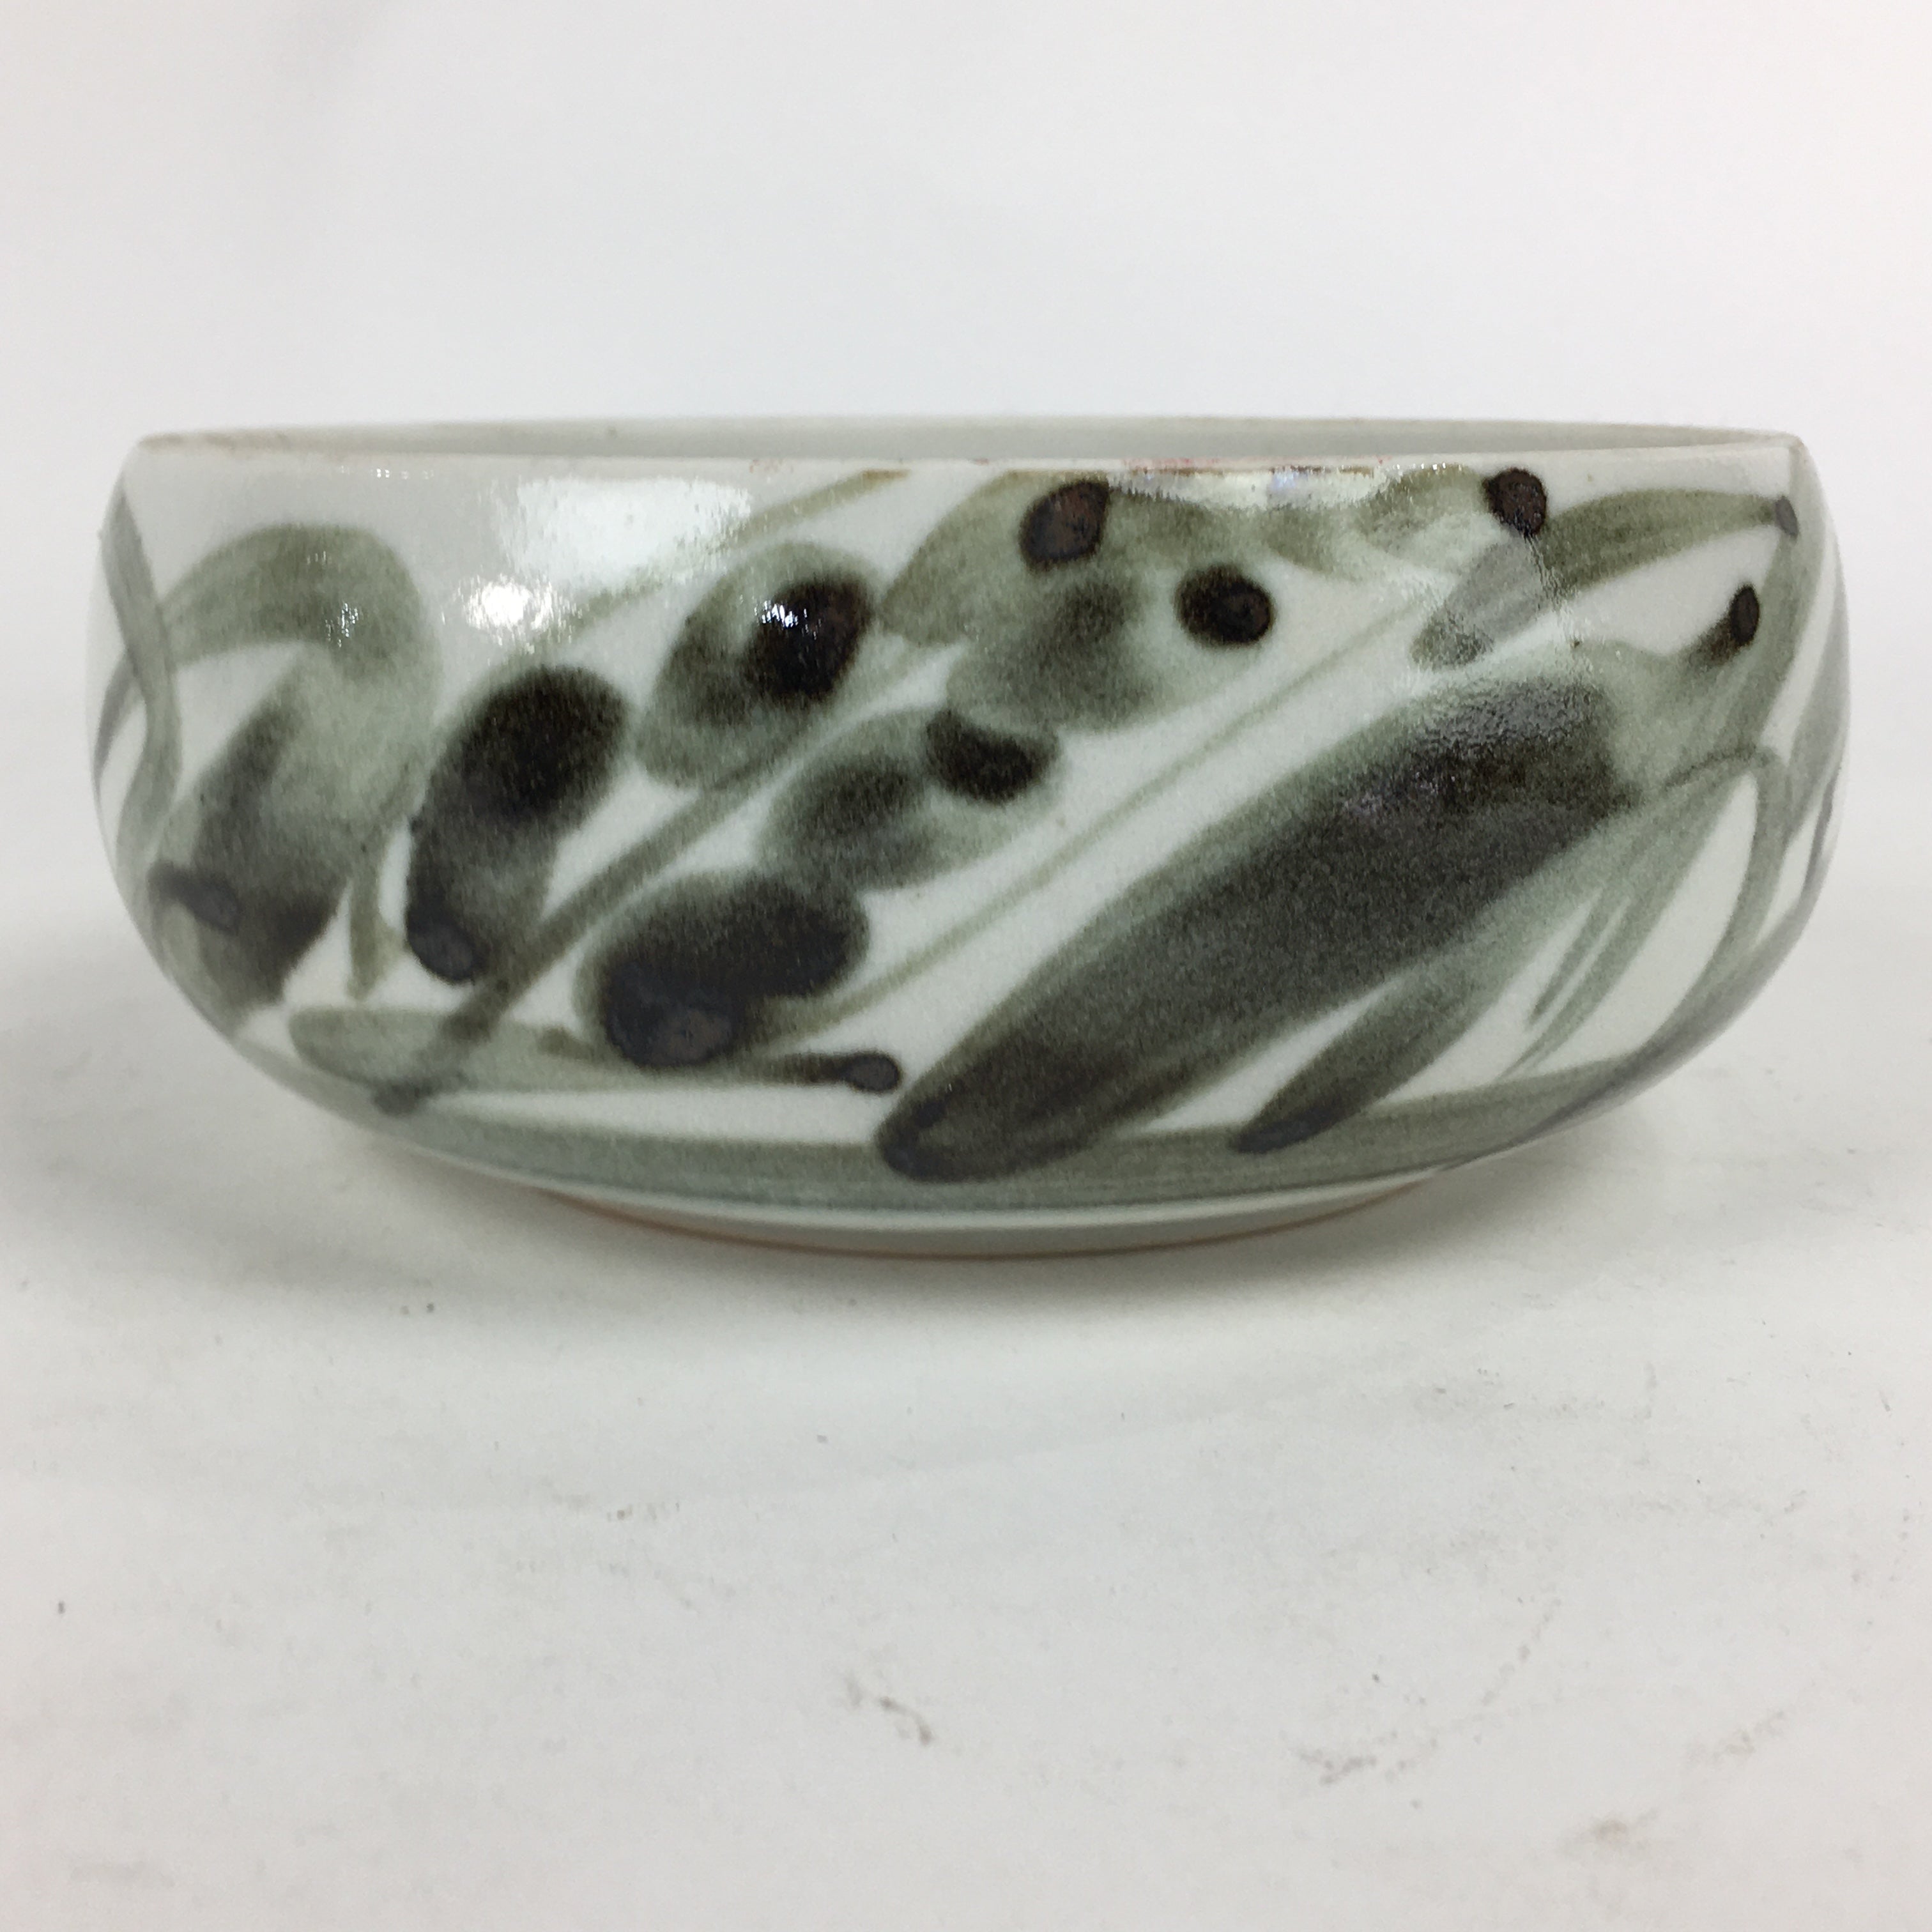 Japanese Porcelain Snack Bowl Kashiki Pottery Round Black Brush Design PP772